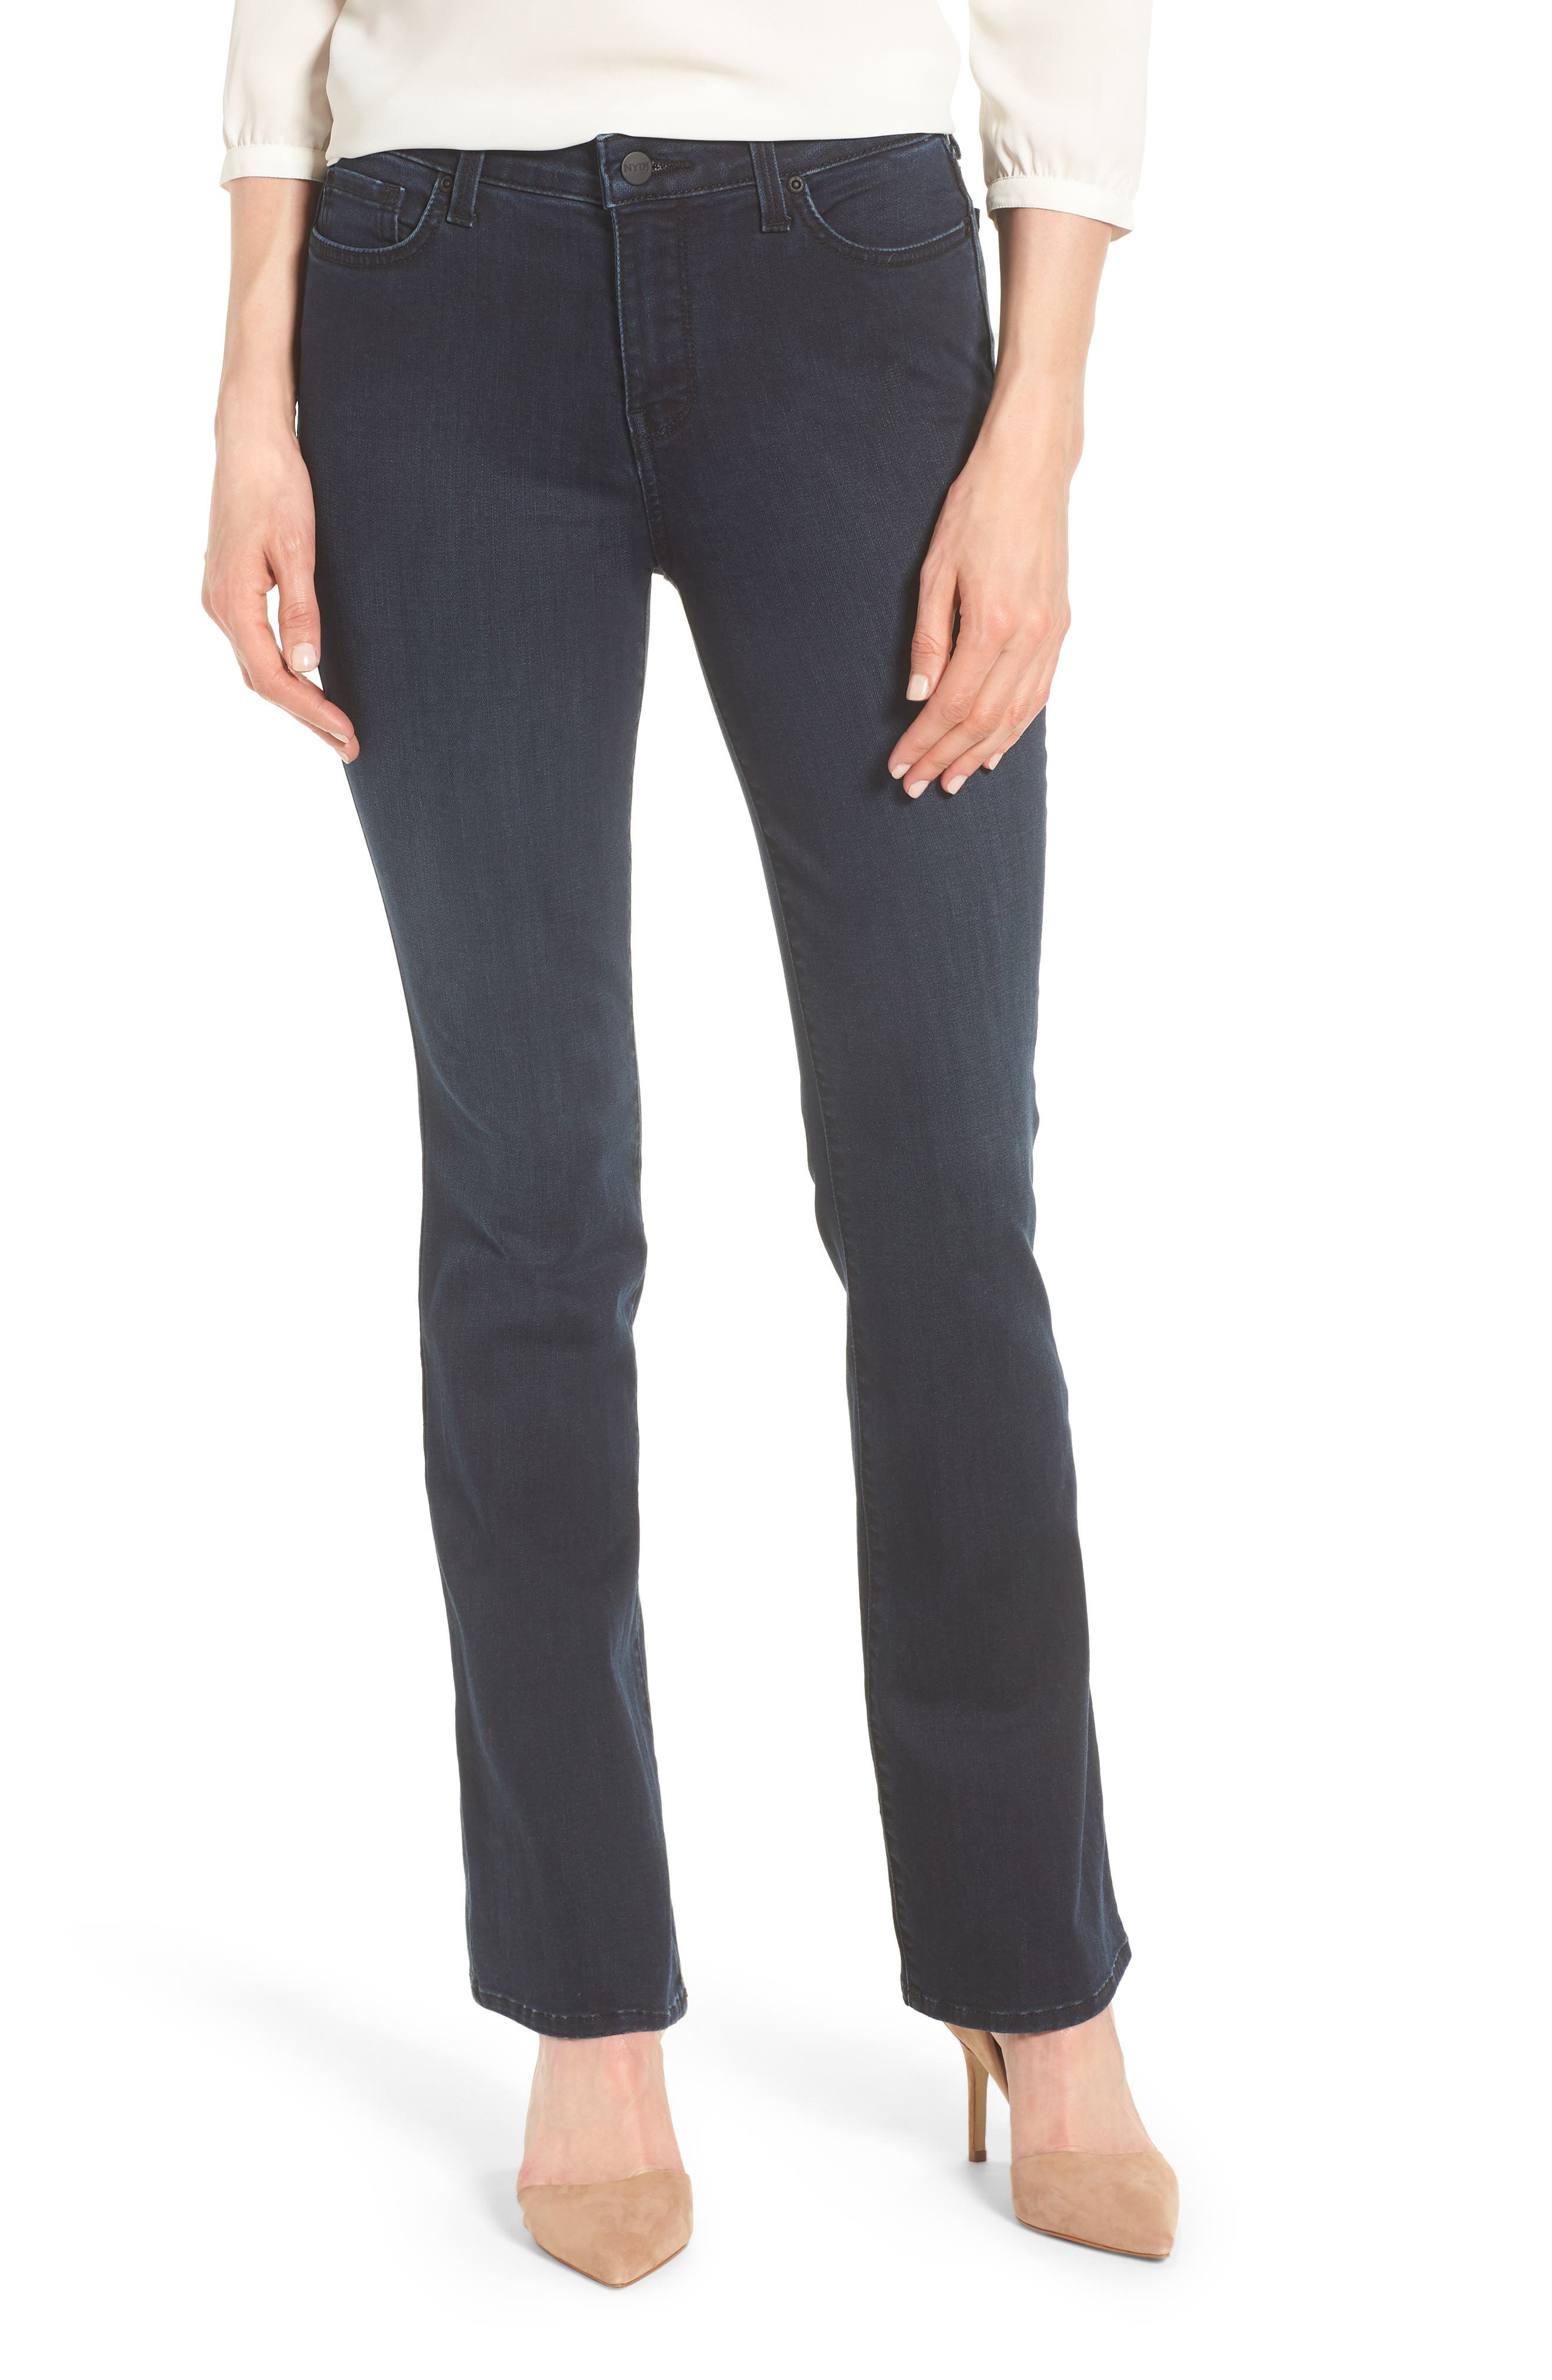 nydj women's barbara bootcut jeans